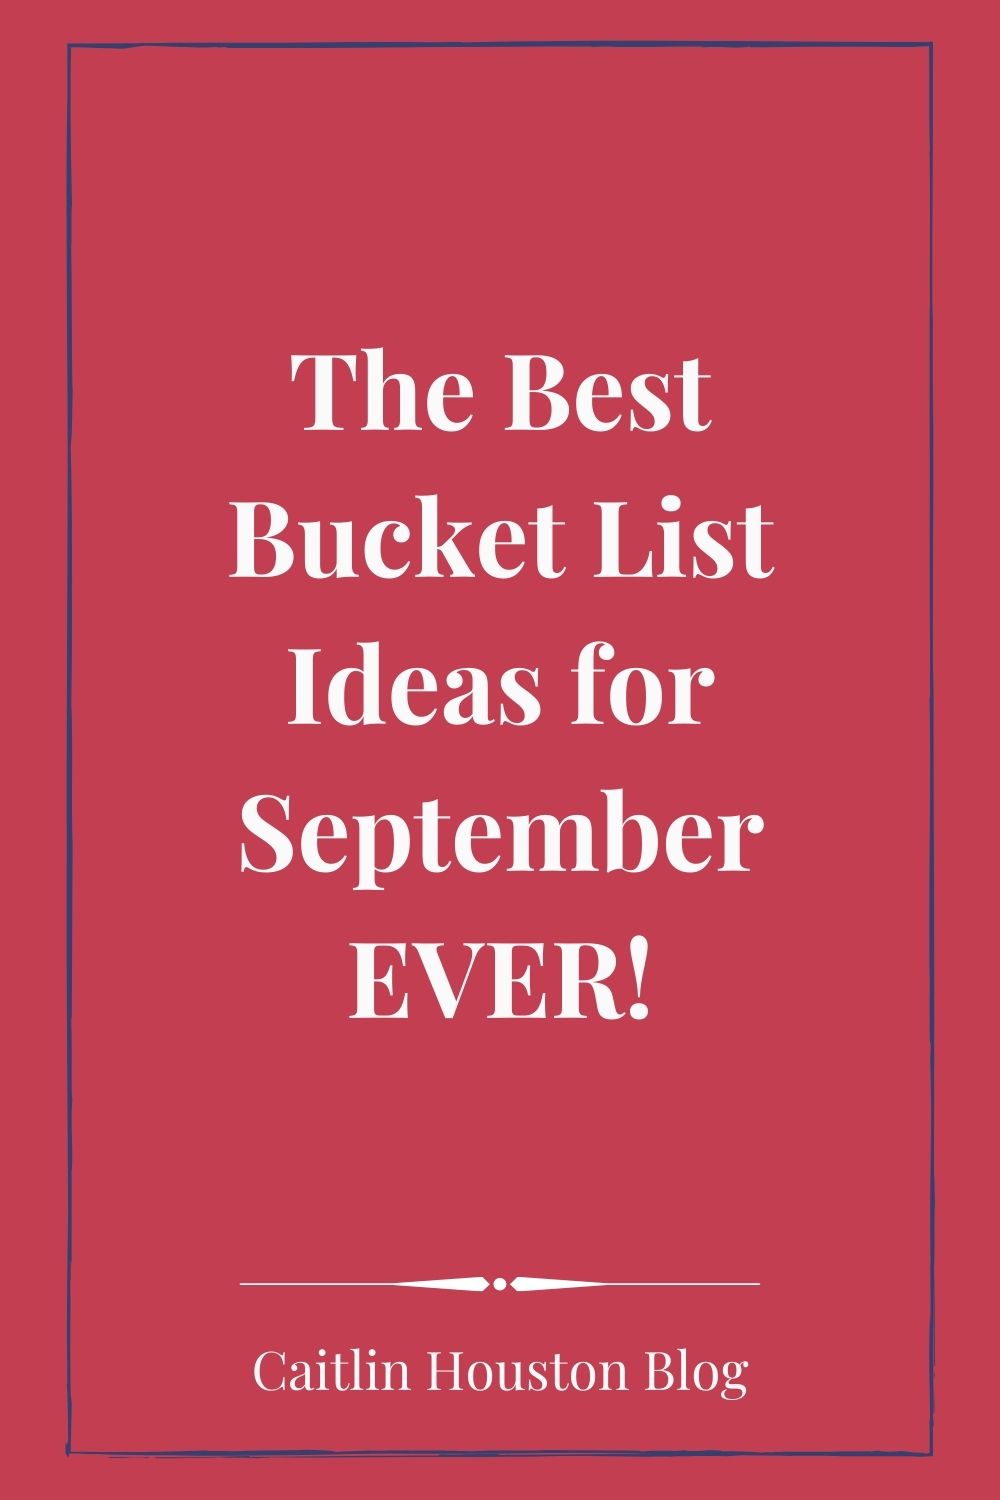 The Best September Bucket List Ideas - Caitlin Houston Blog